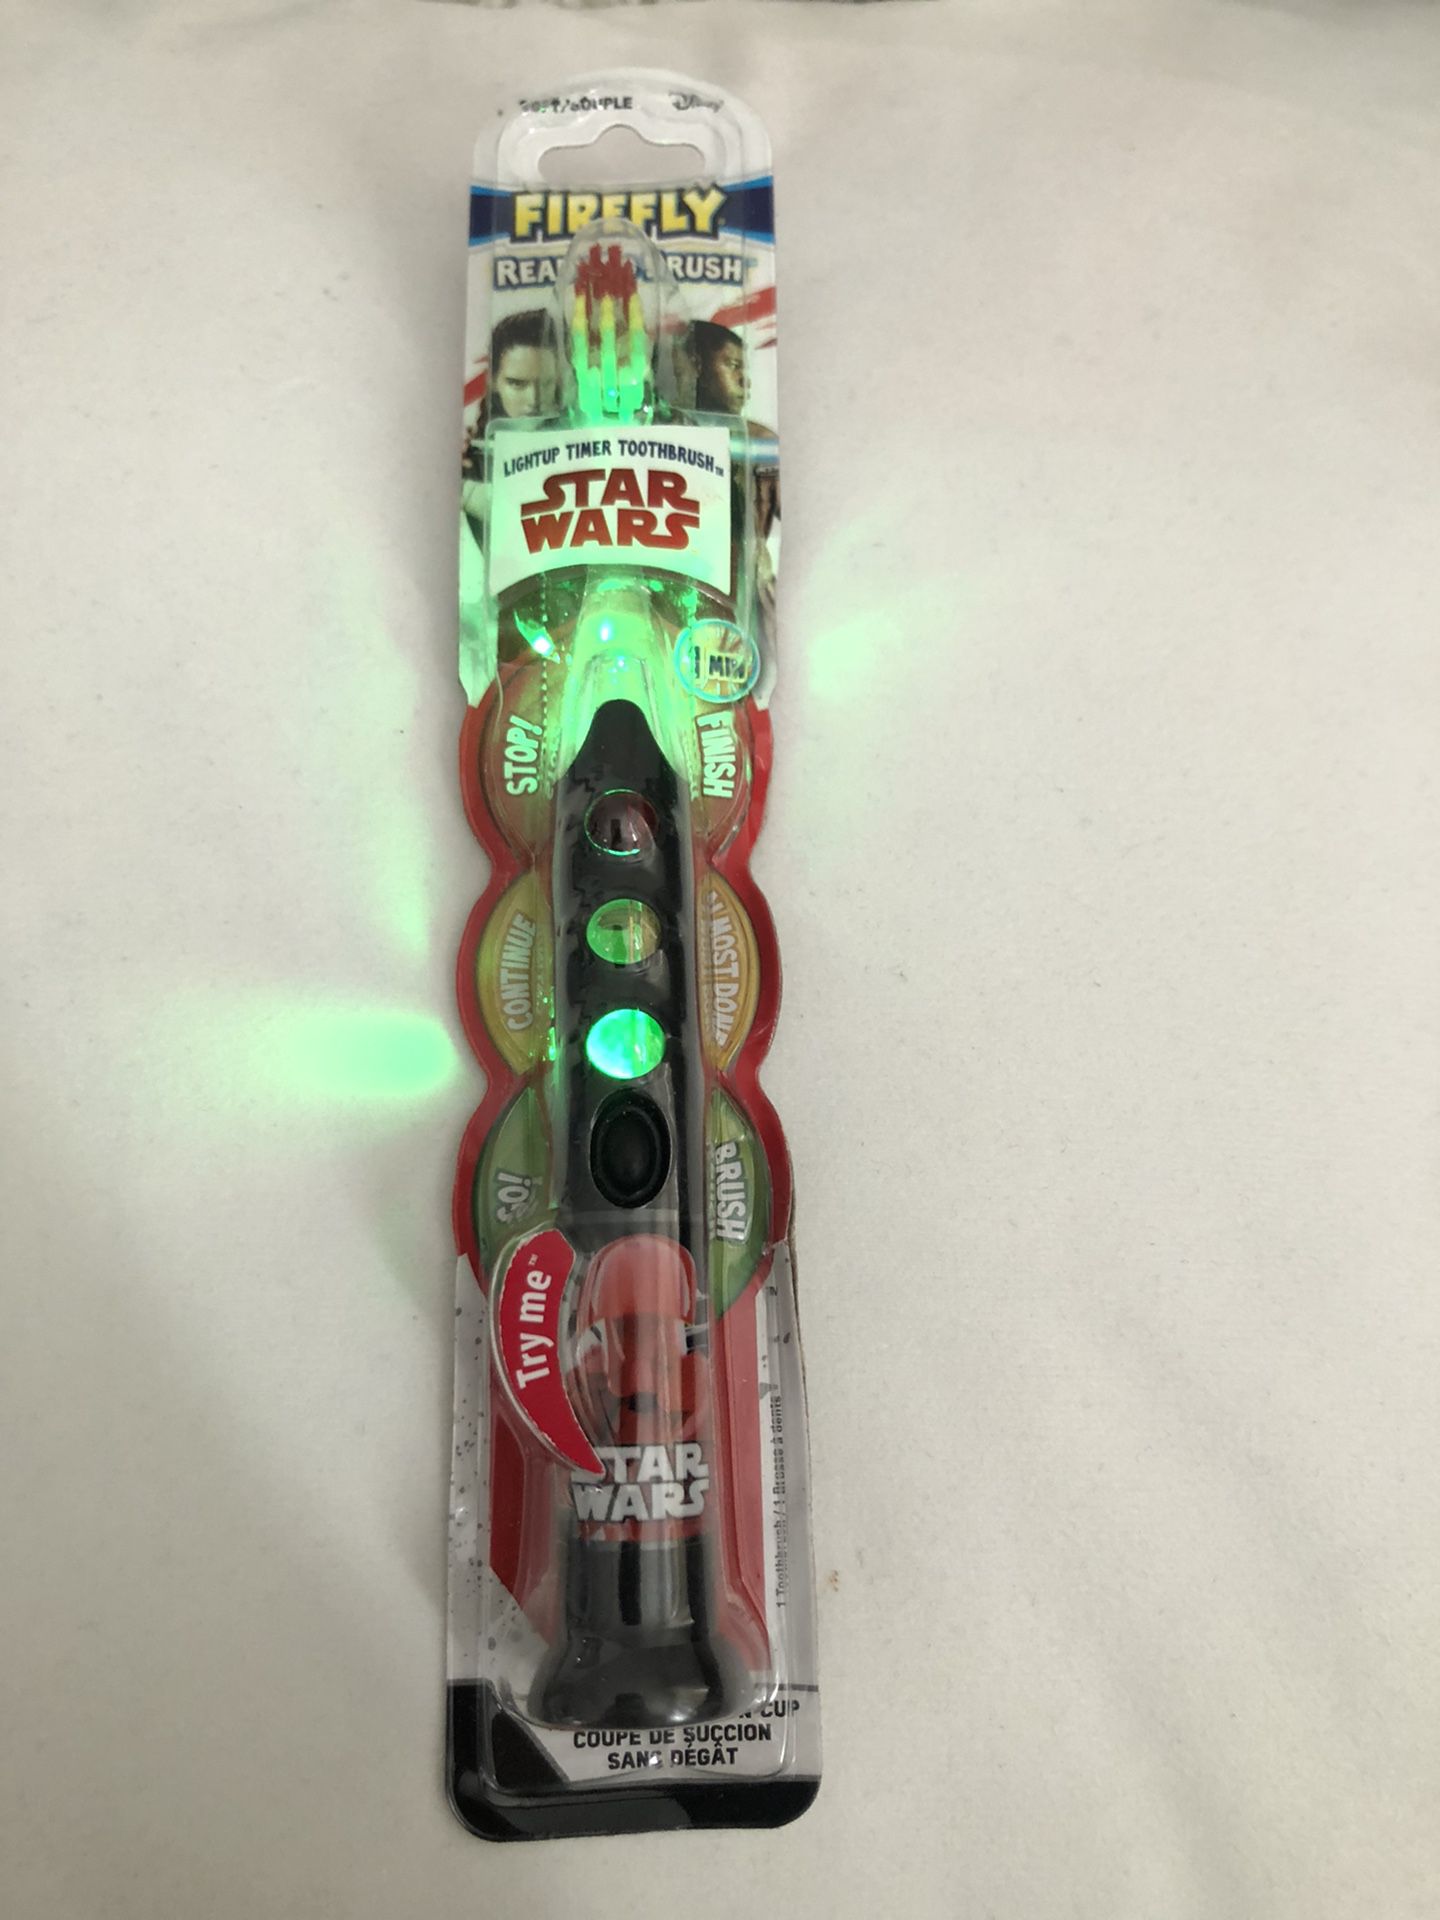 Firefly Star Wars Ready Go Brush Light Up Timer Toothbrush, Soft 1 ea